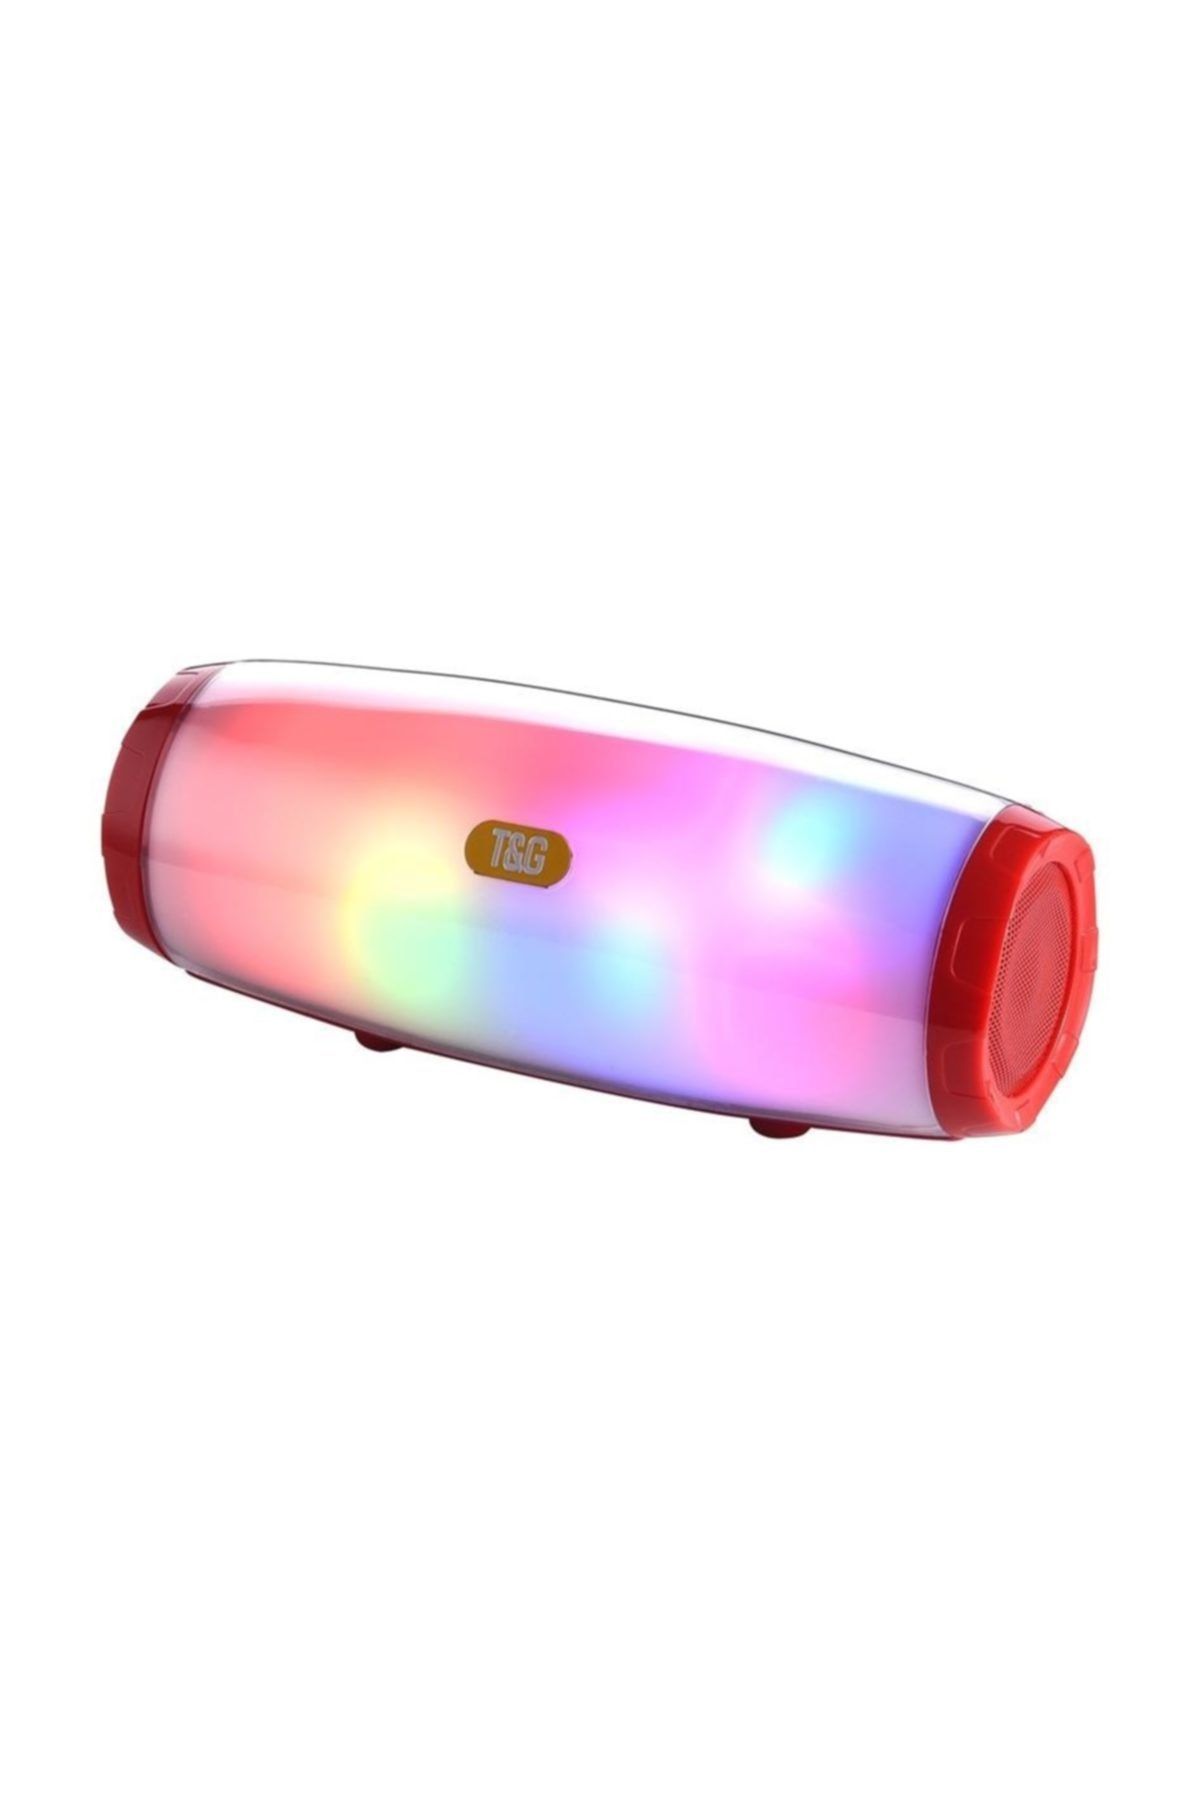 T G T&g Tg165 Renkli Işıklı Bluetooth Hoparlör Fm/sd Kart/usb Girişli Kırmızı